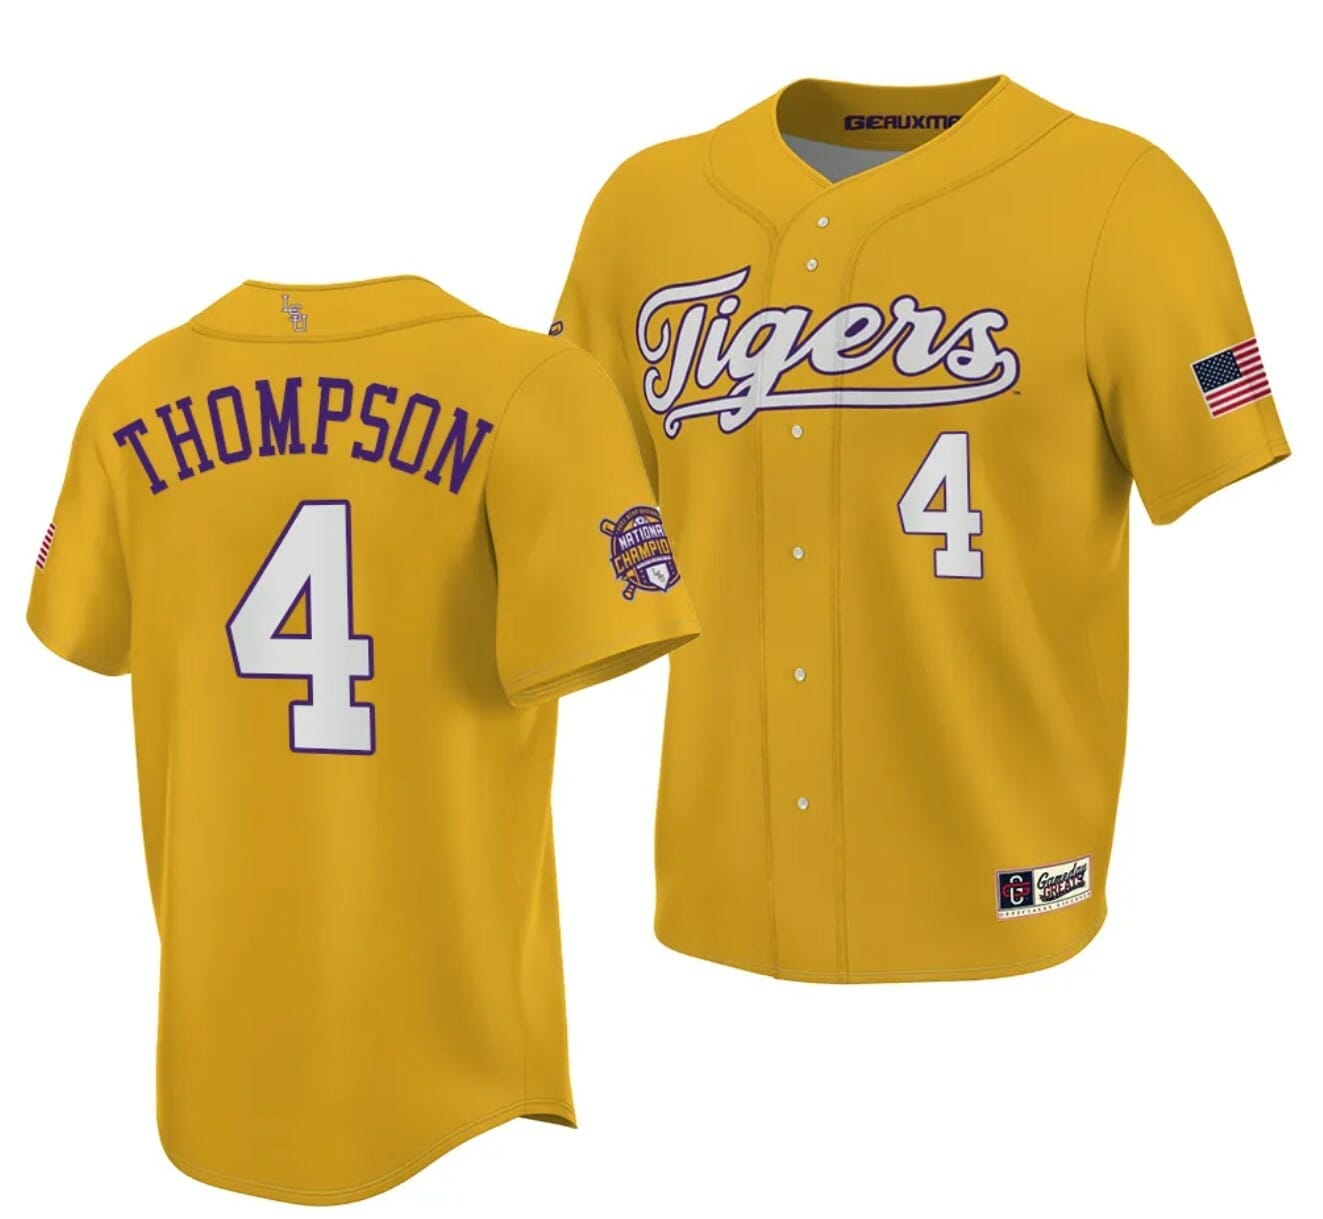 Available] Buy New Jordan Thompson Jersey Gold #4